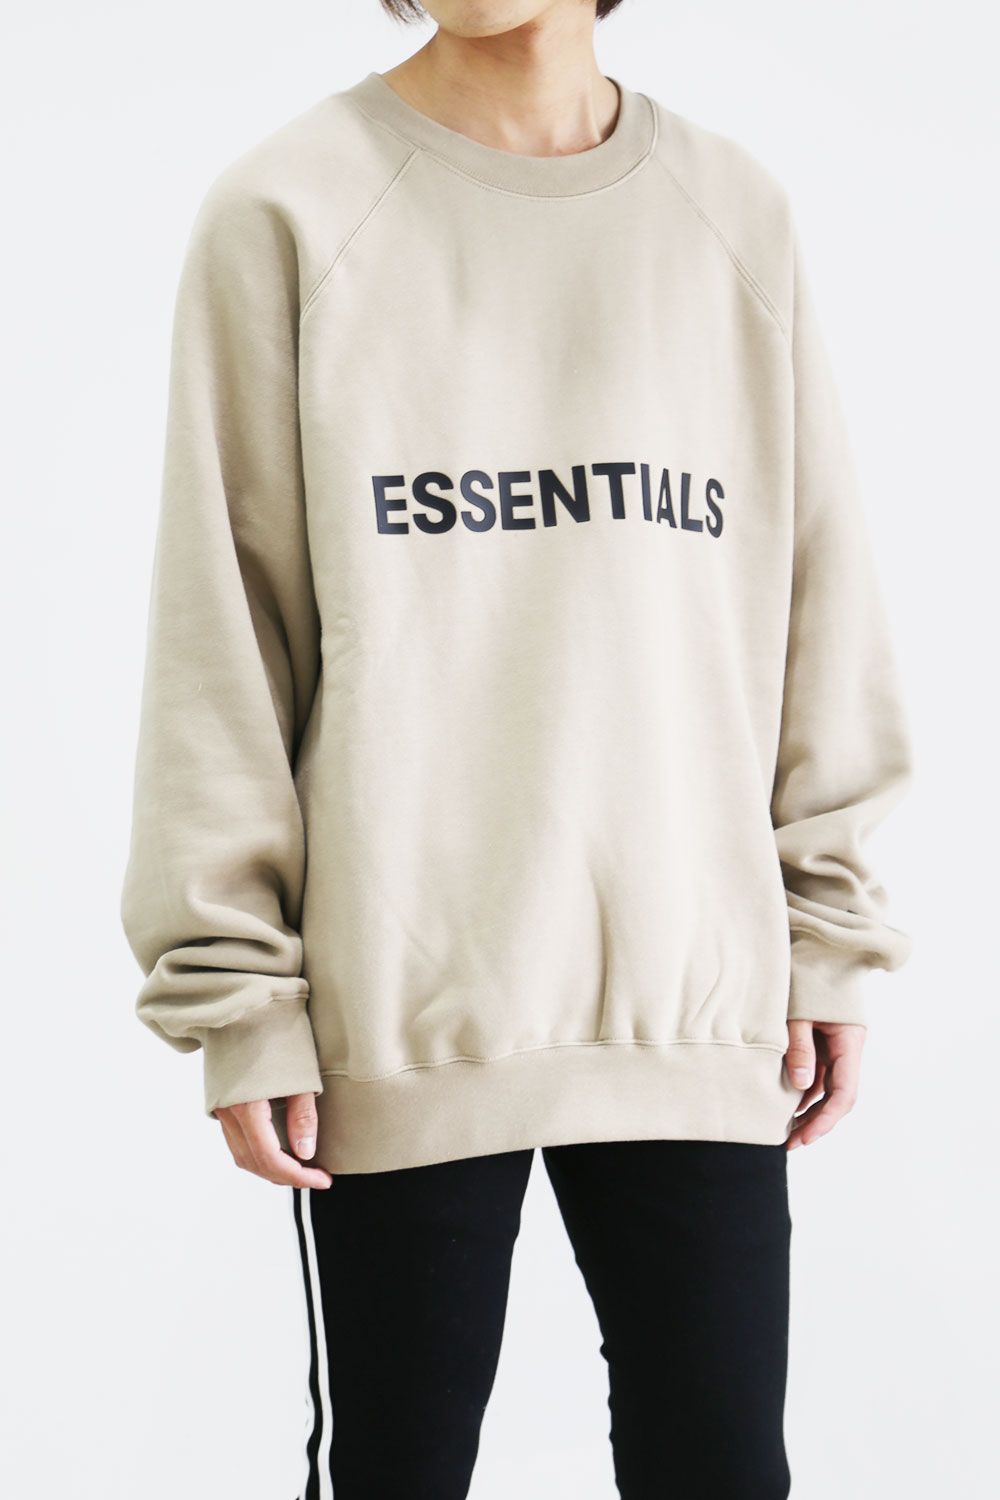 Essentials crewneck Sweatshirt スウェット タン